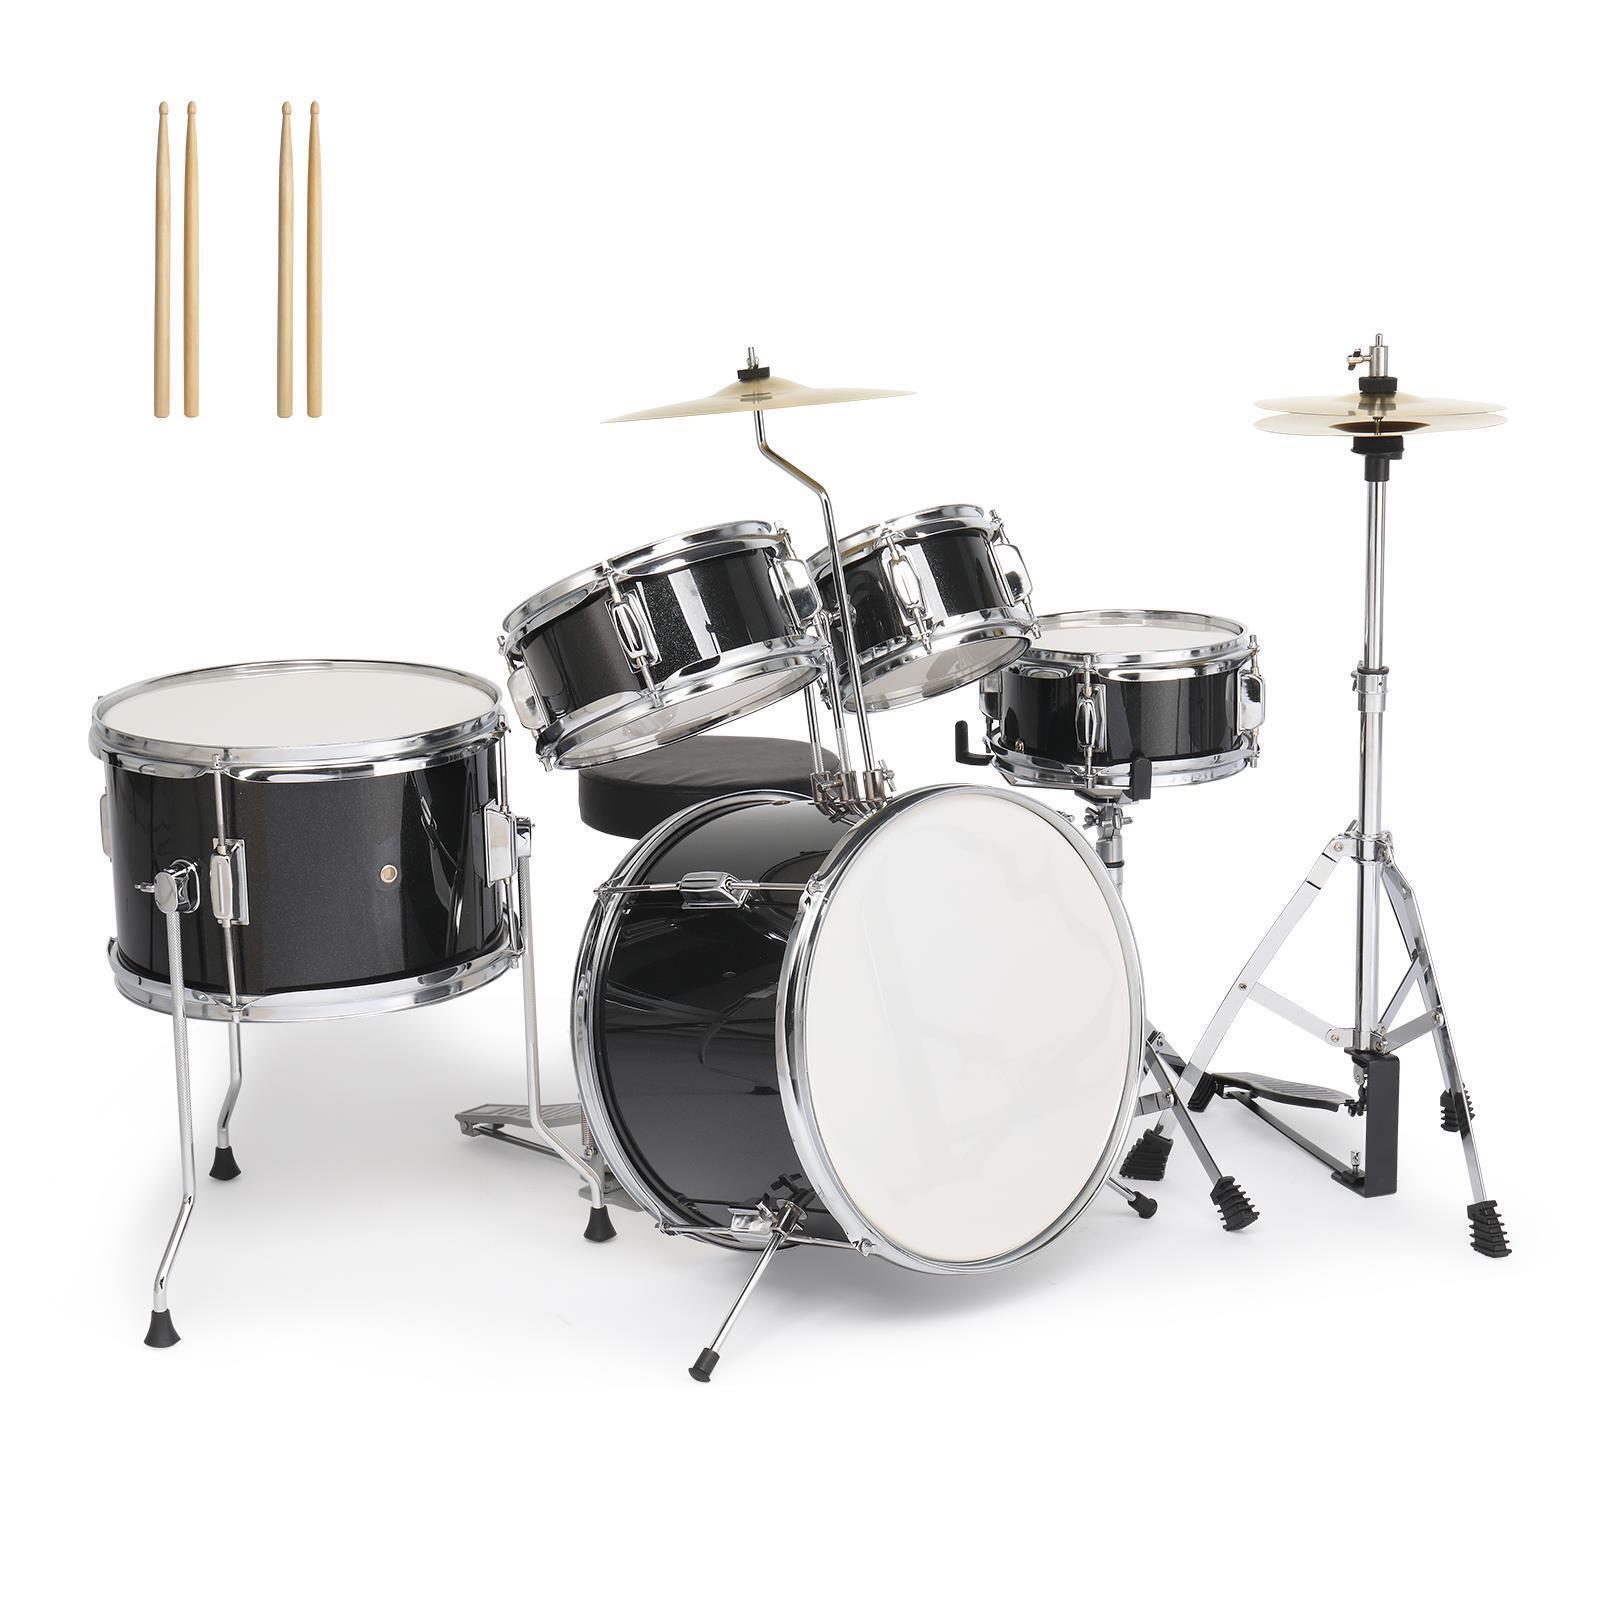 Ktaxon 5-Piece 14″ x 10″ Junior Drum Percussion Kit for Child DIY Starter 1